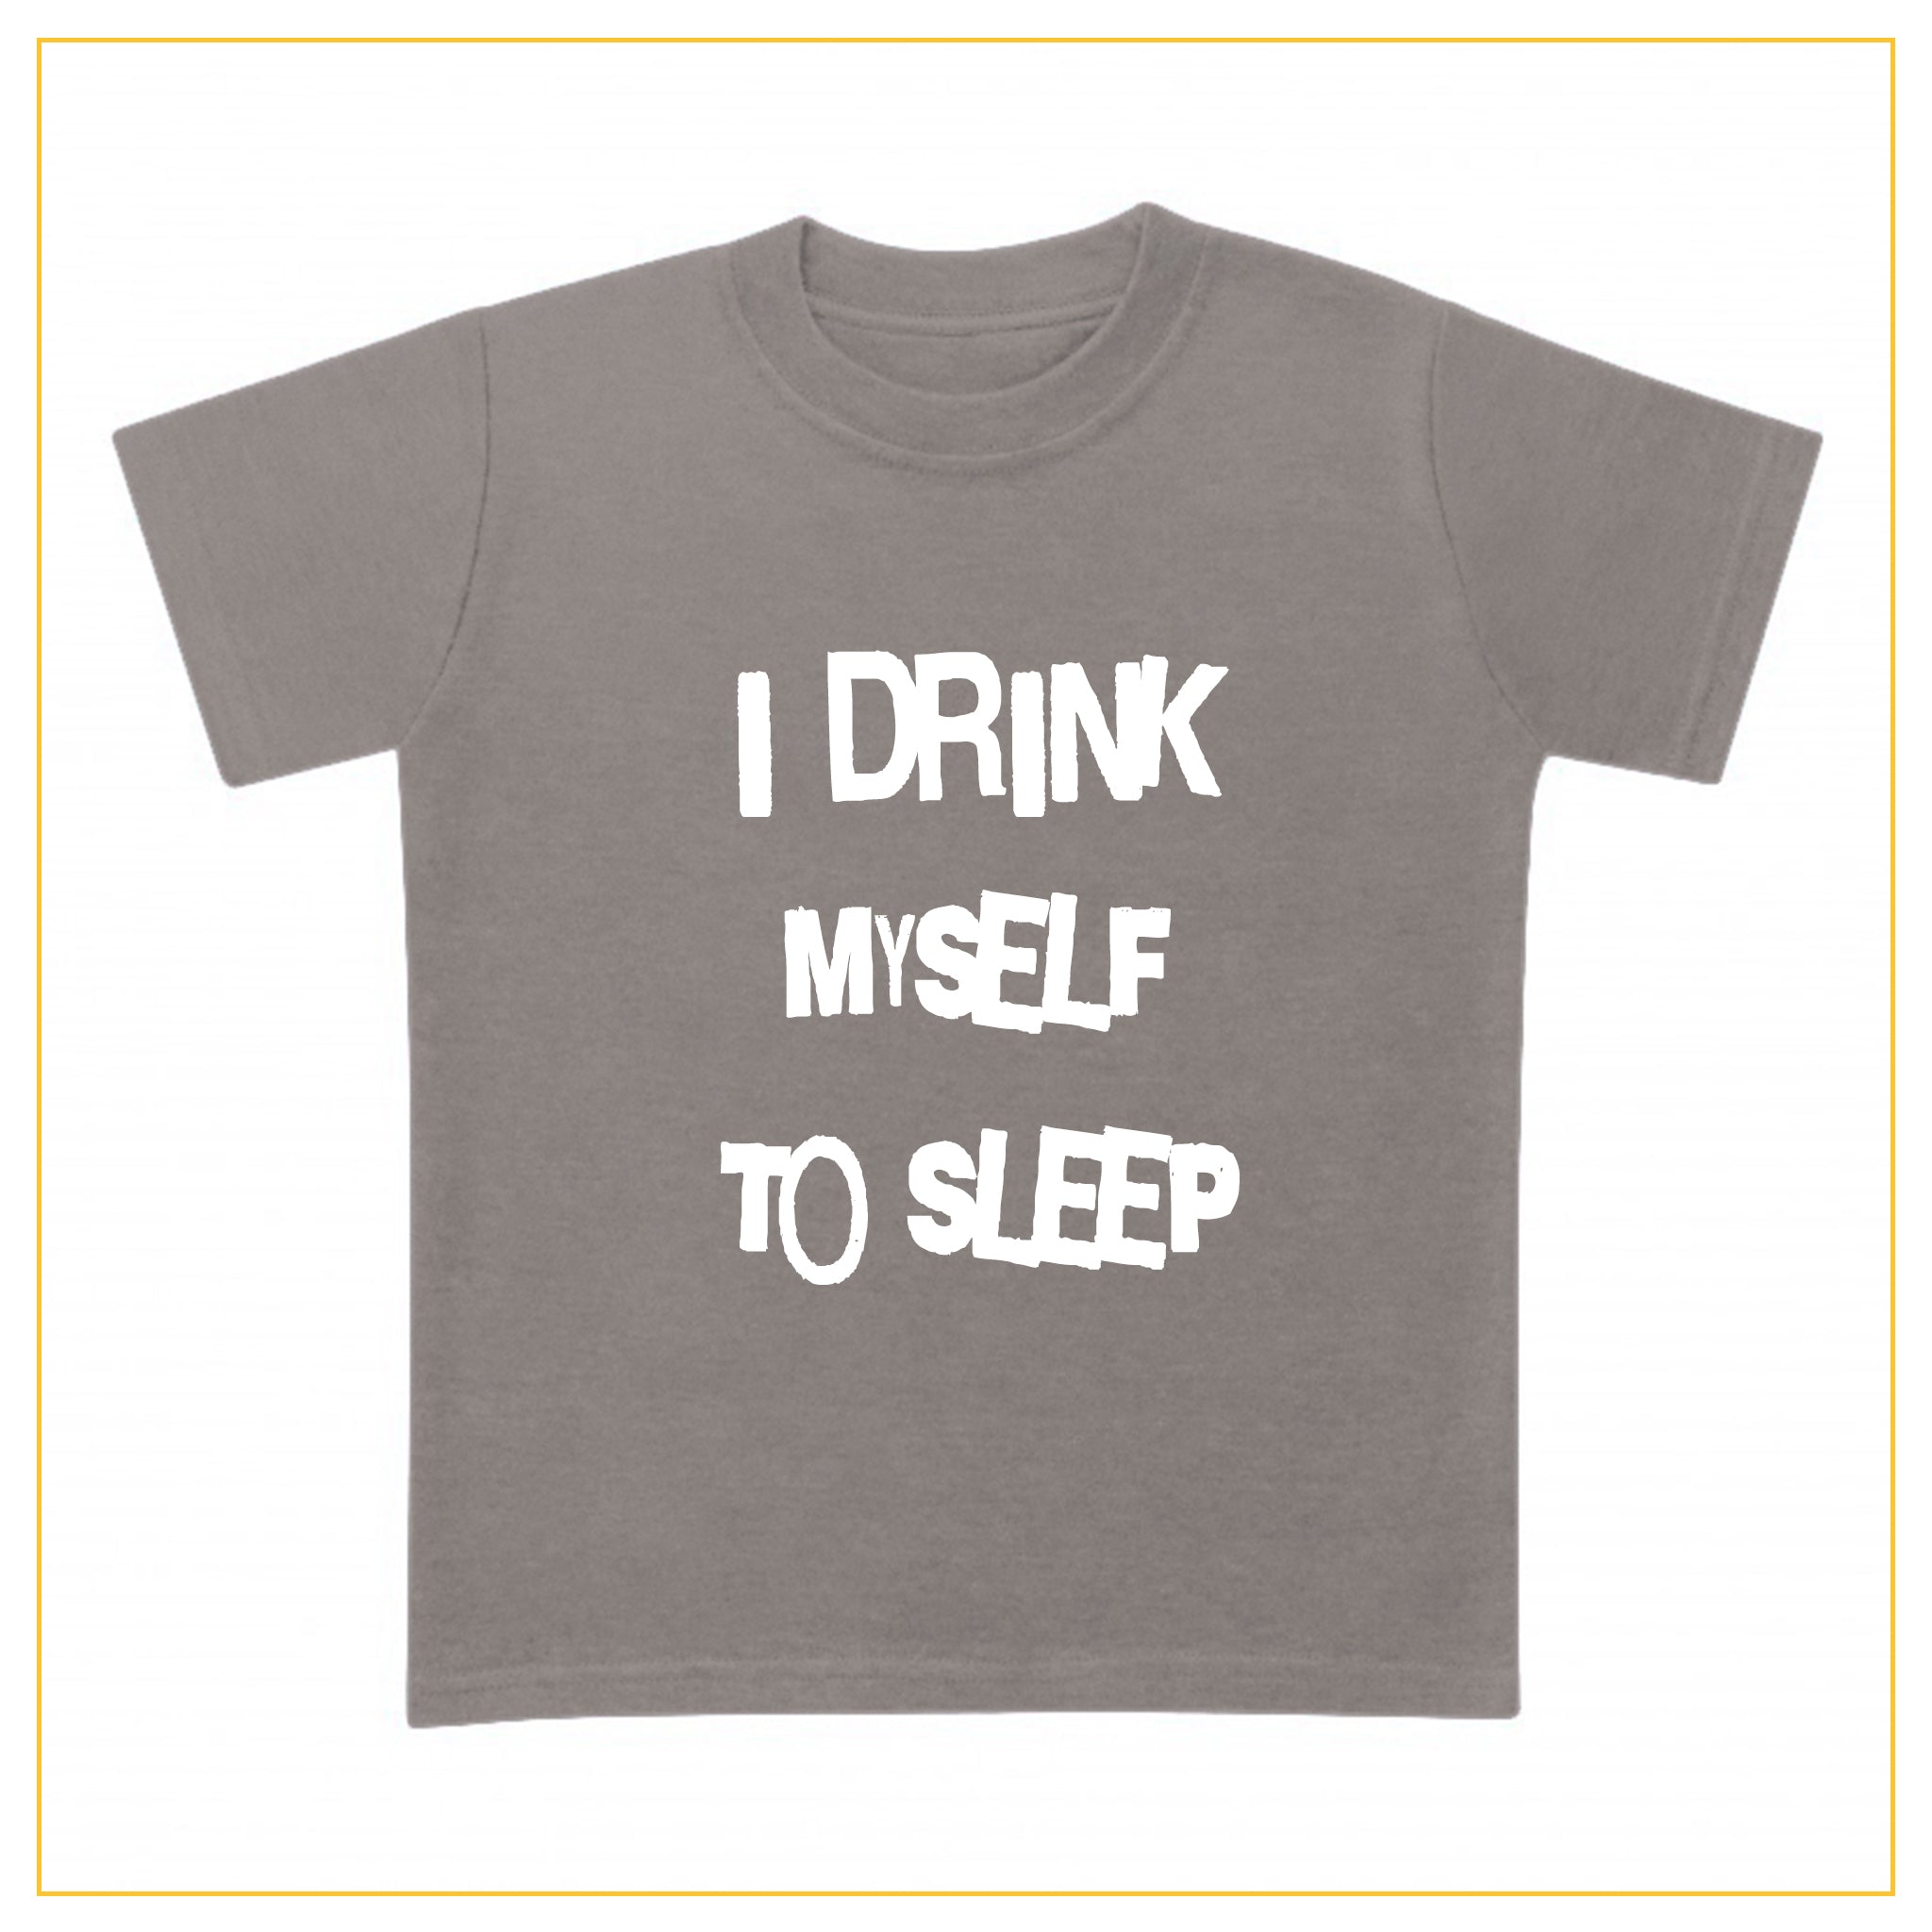 I drink myself to sleep baby t-shirt in grey